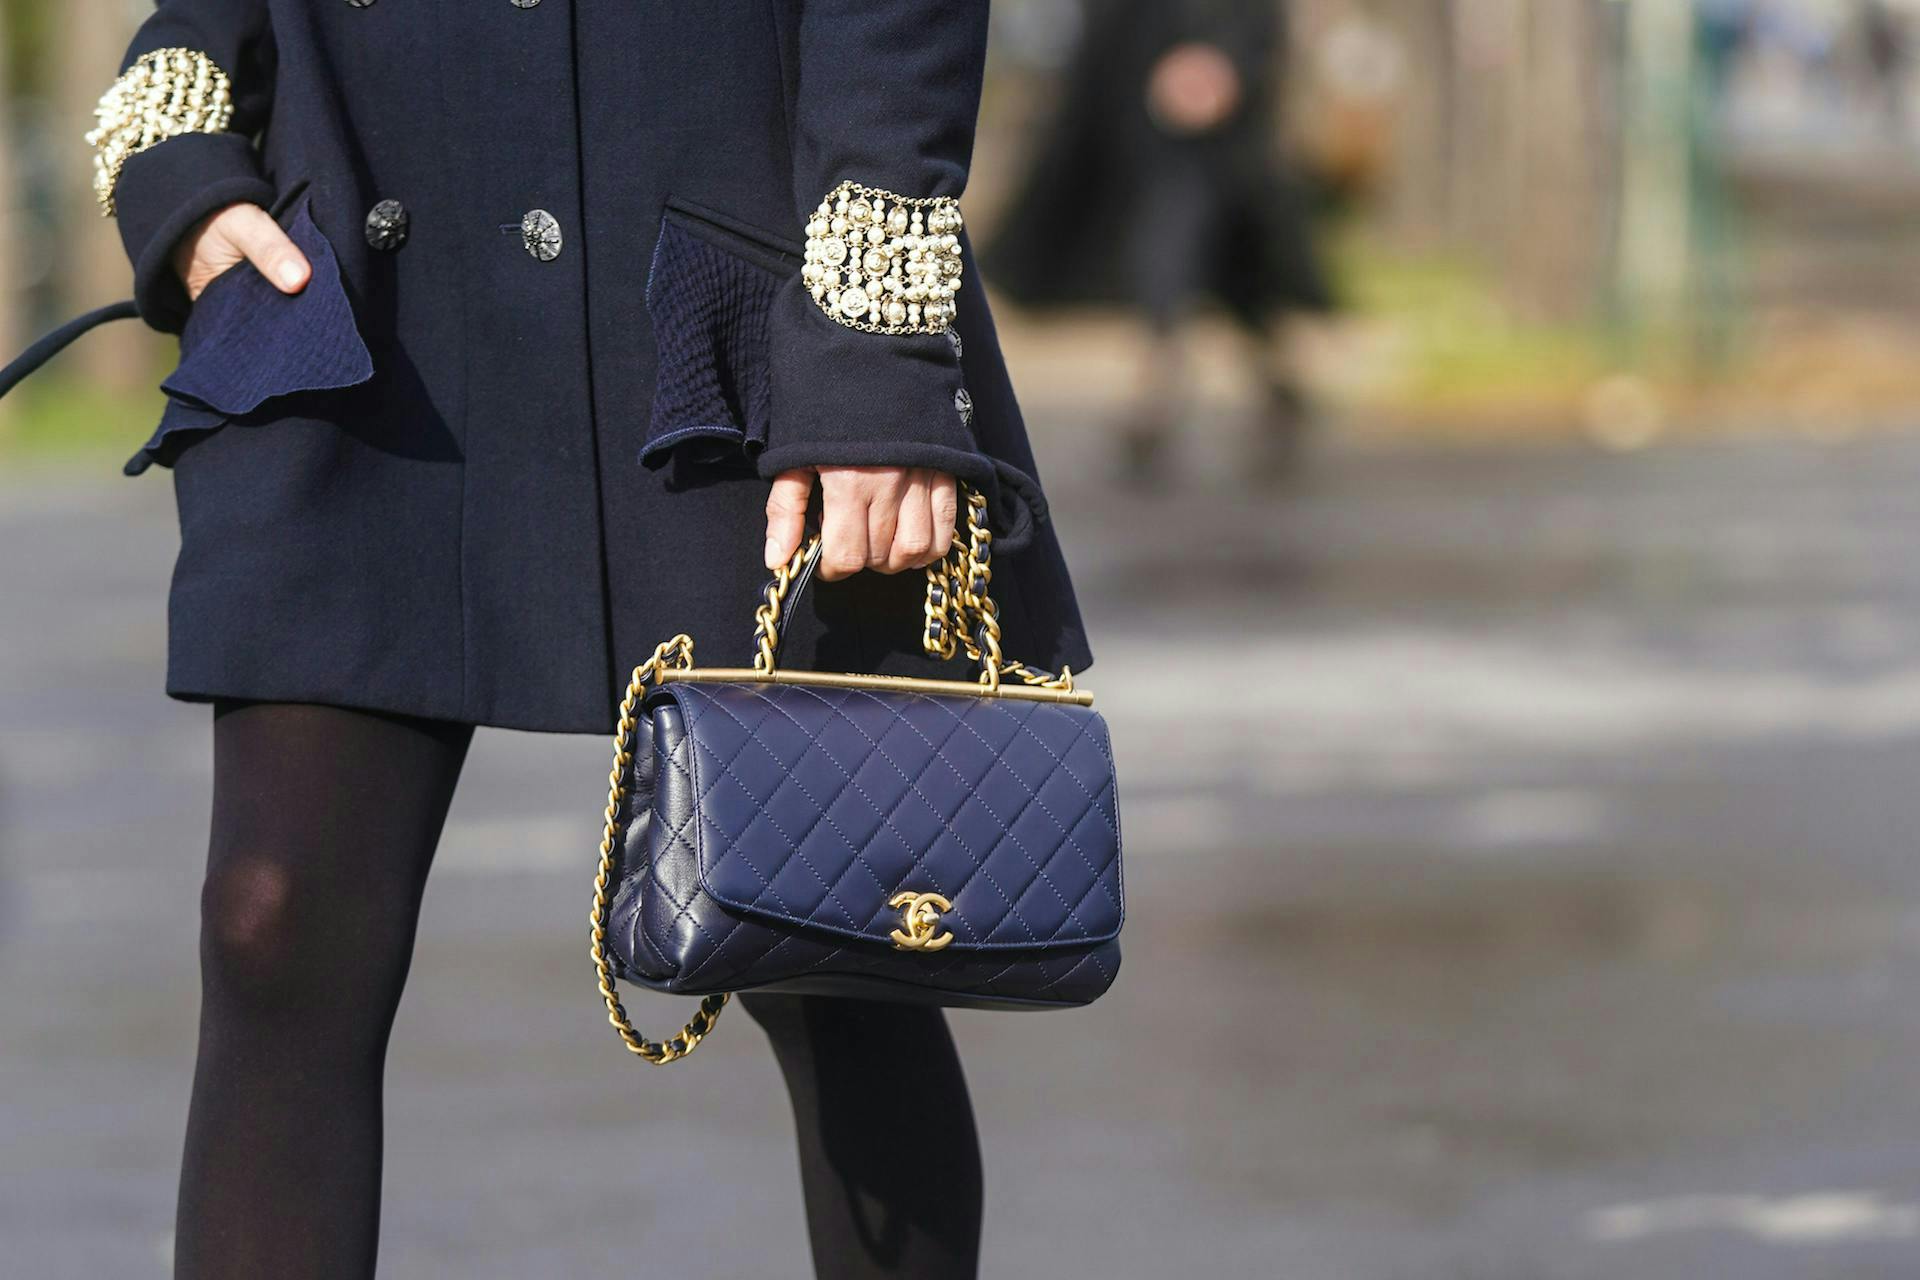 detail,close up paris clothing apparel handbag accessories bag accessory person human purse footwear